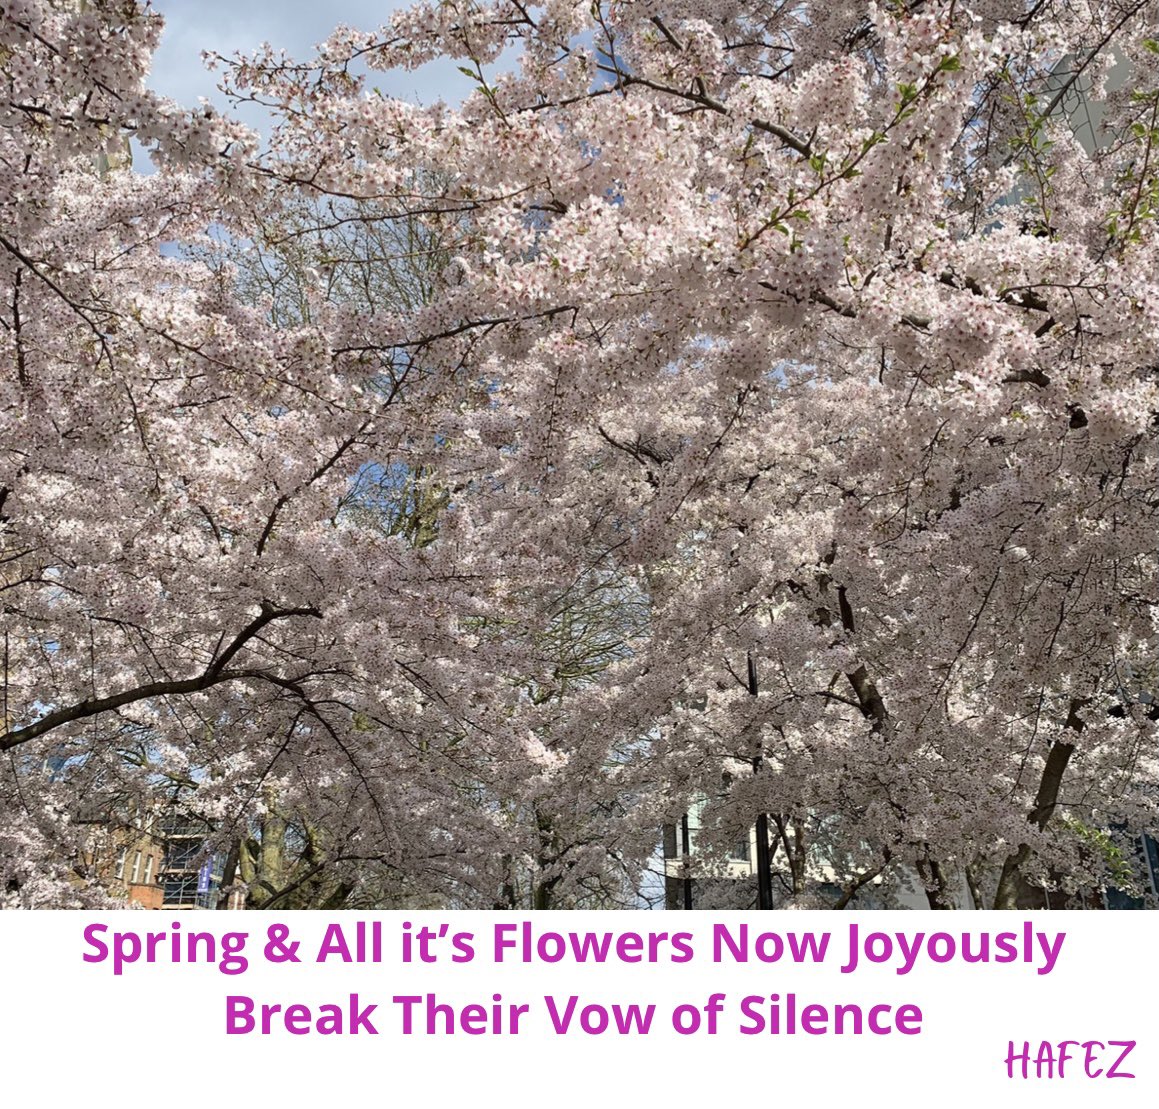 #Spring🌱 & all it’s Flowers🌸now joyously break their vow of silence. #HAFEZ 
#Sakura in #SwissCottage.
@roxanamjones @miraclegrids @ybeitollahi @mayorofcamden 
#Nowruz #SuperSoulSunday